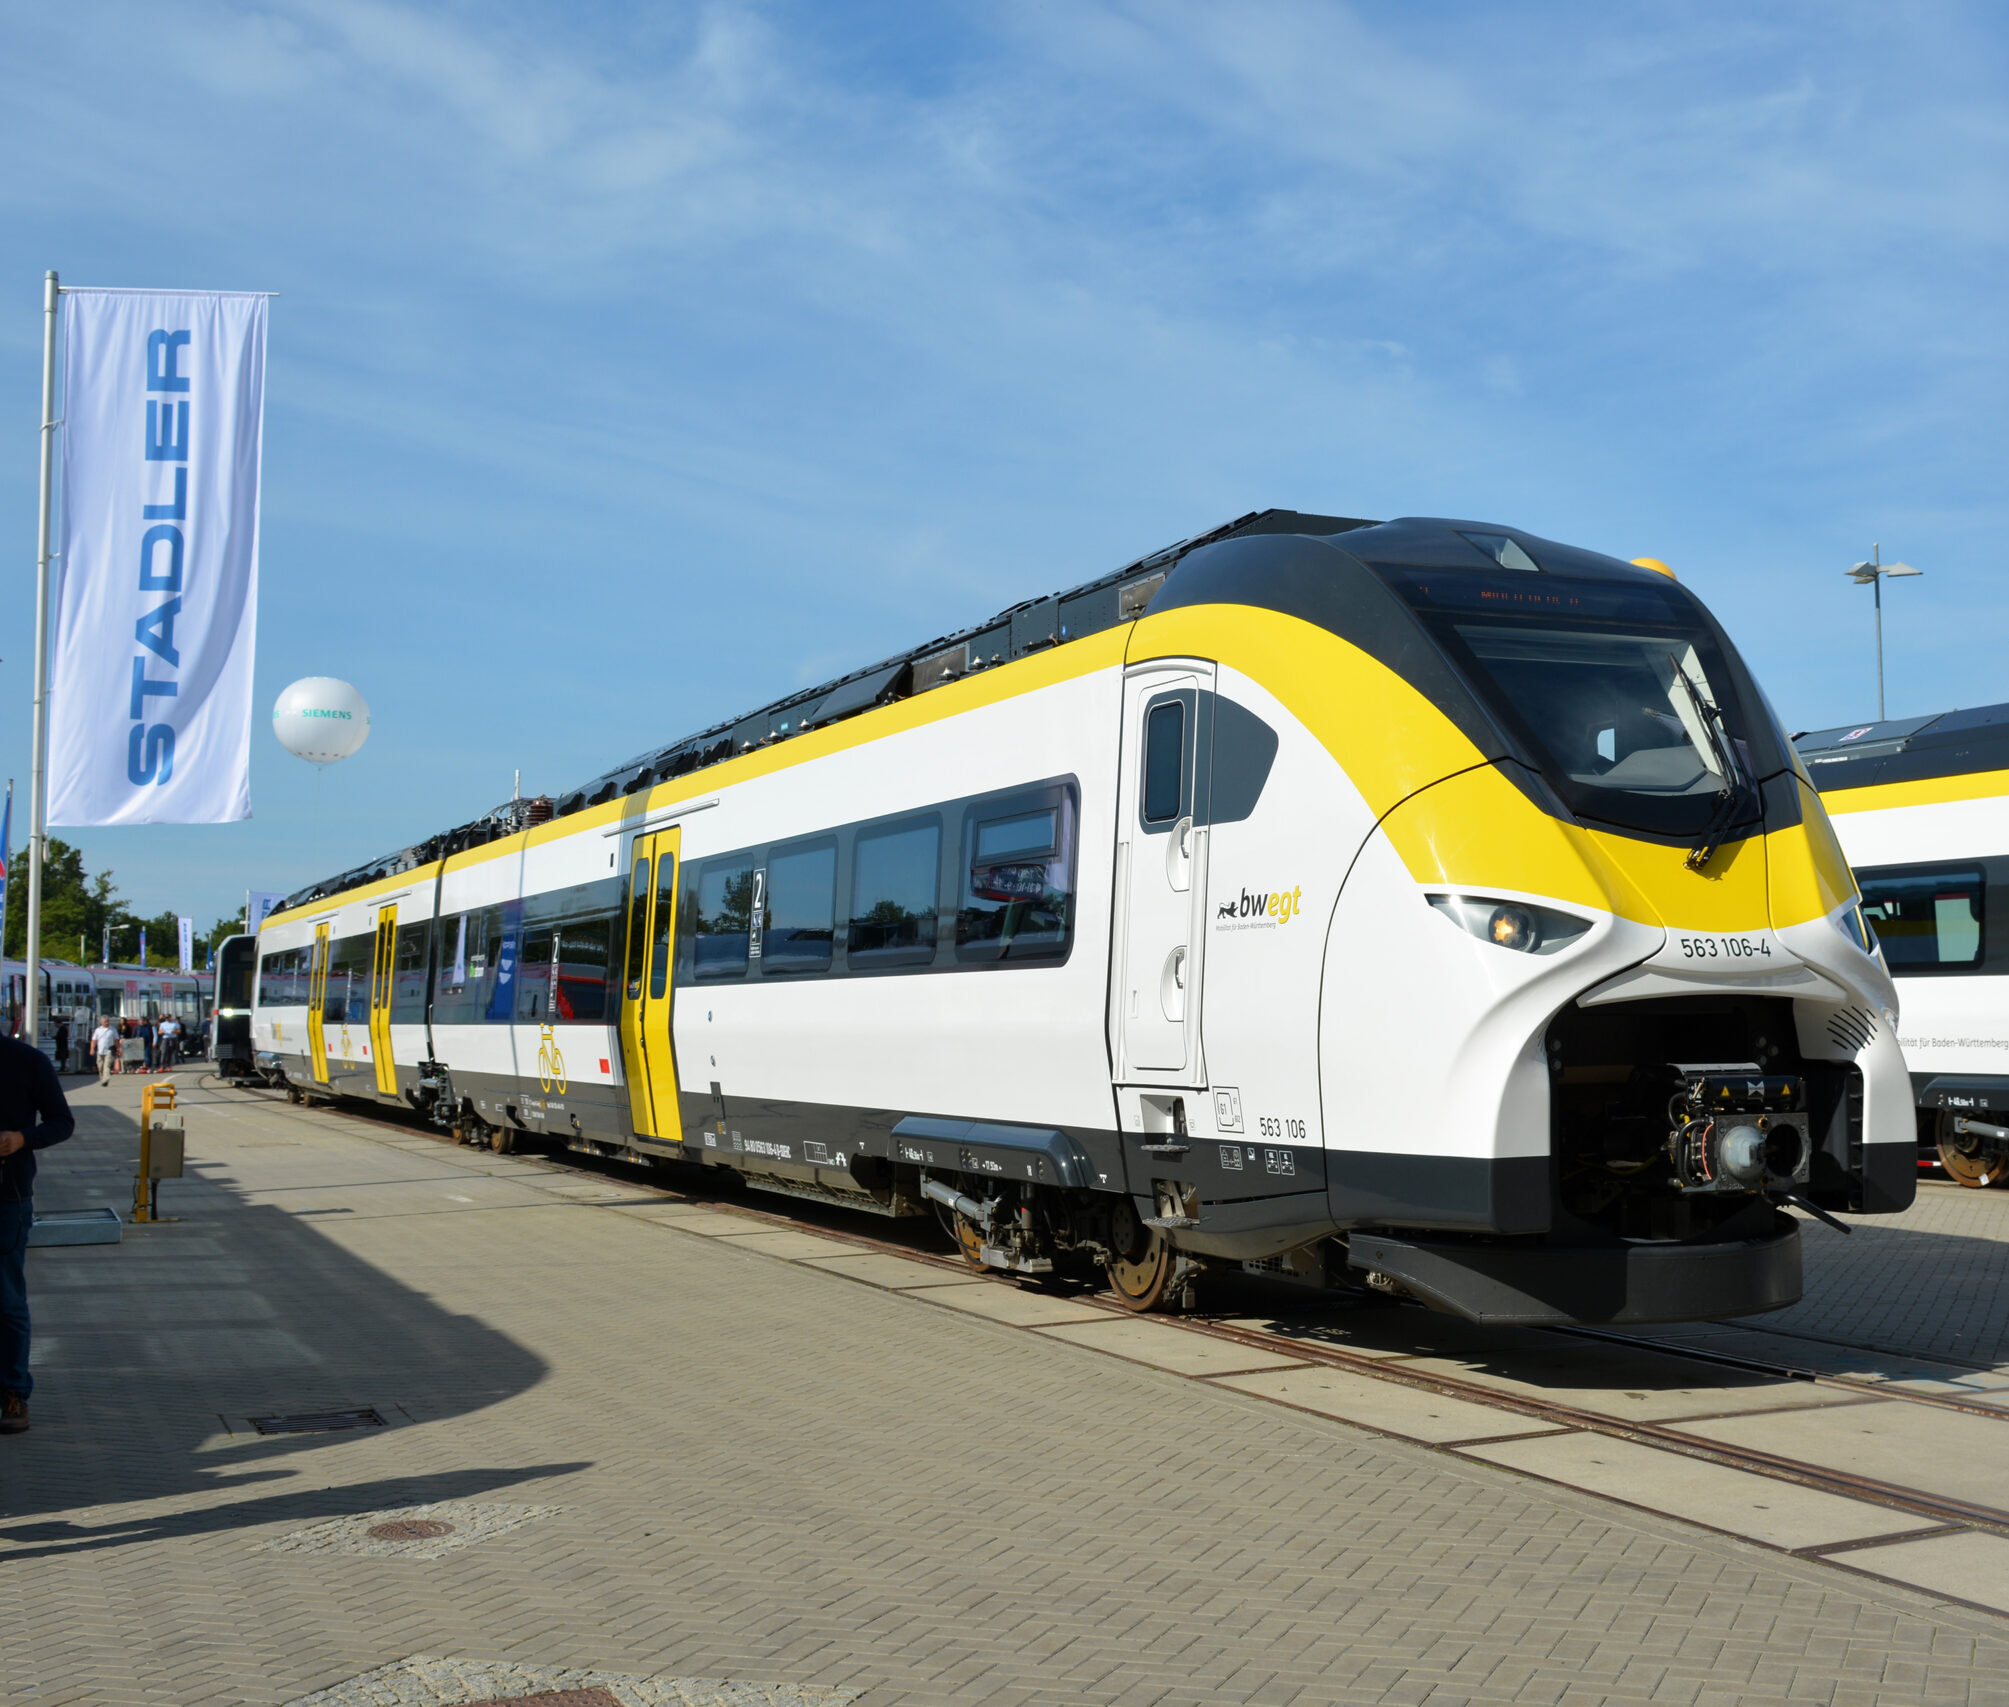 The hybrid train Mireo Plus B by Siemens